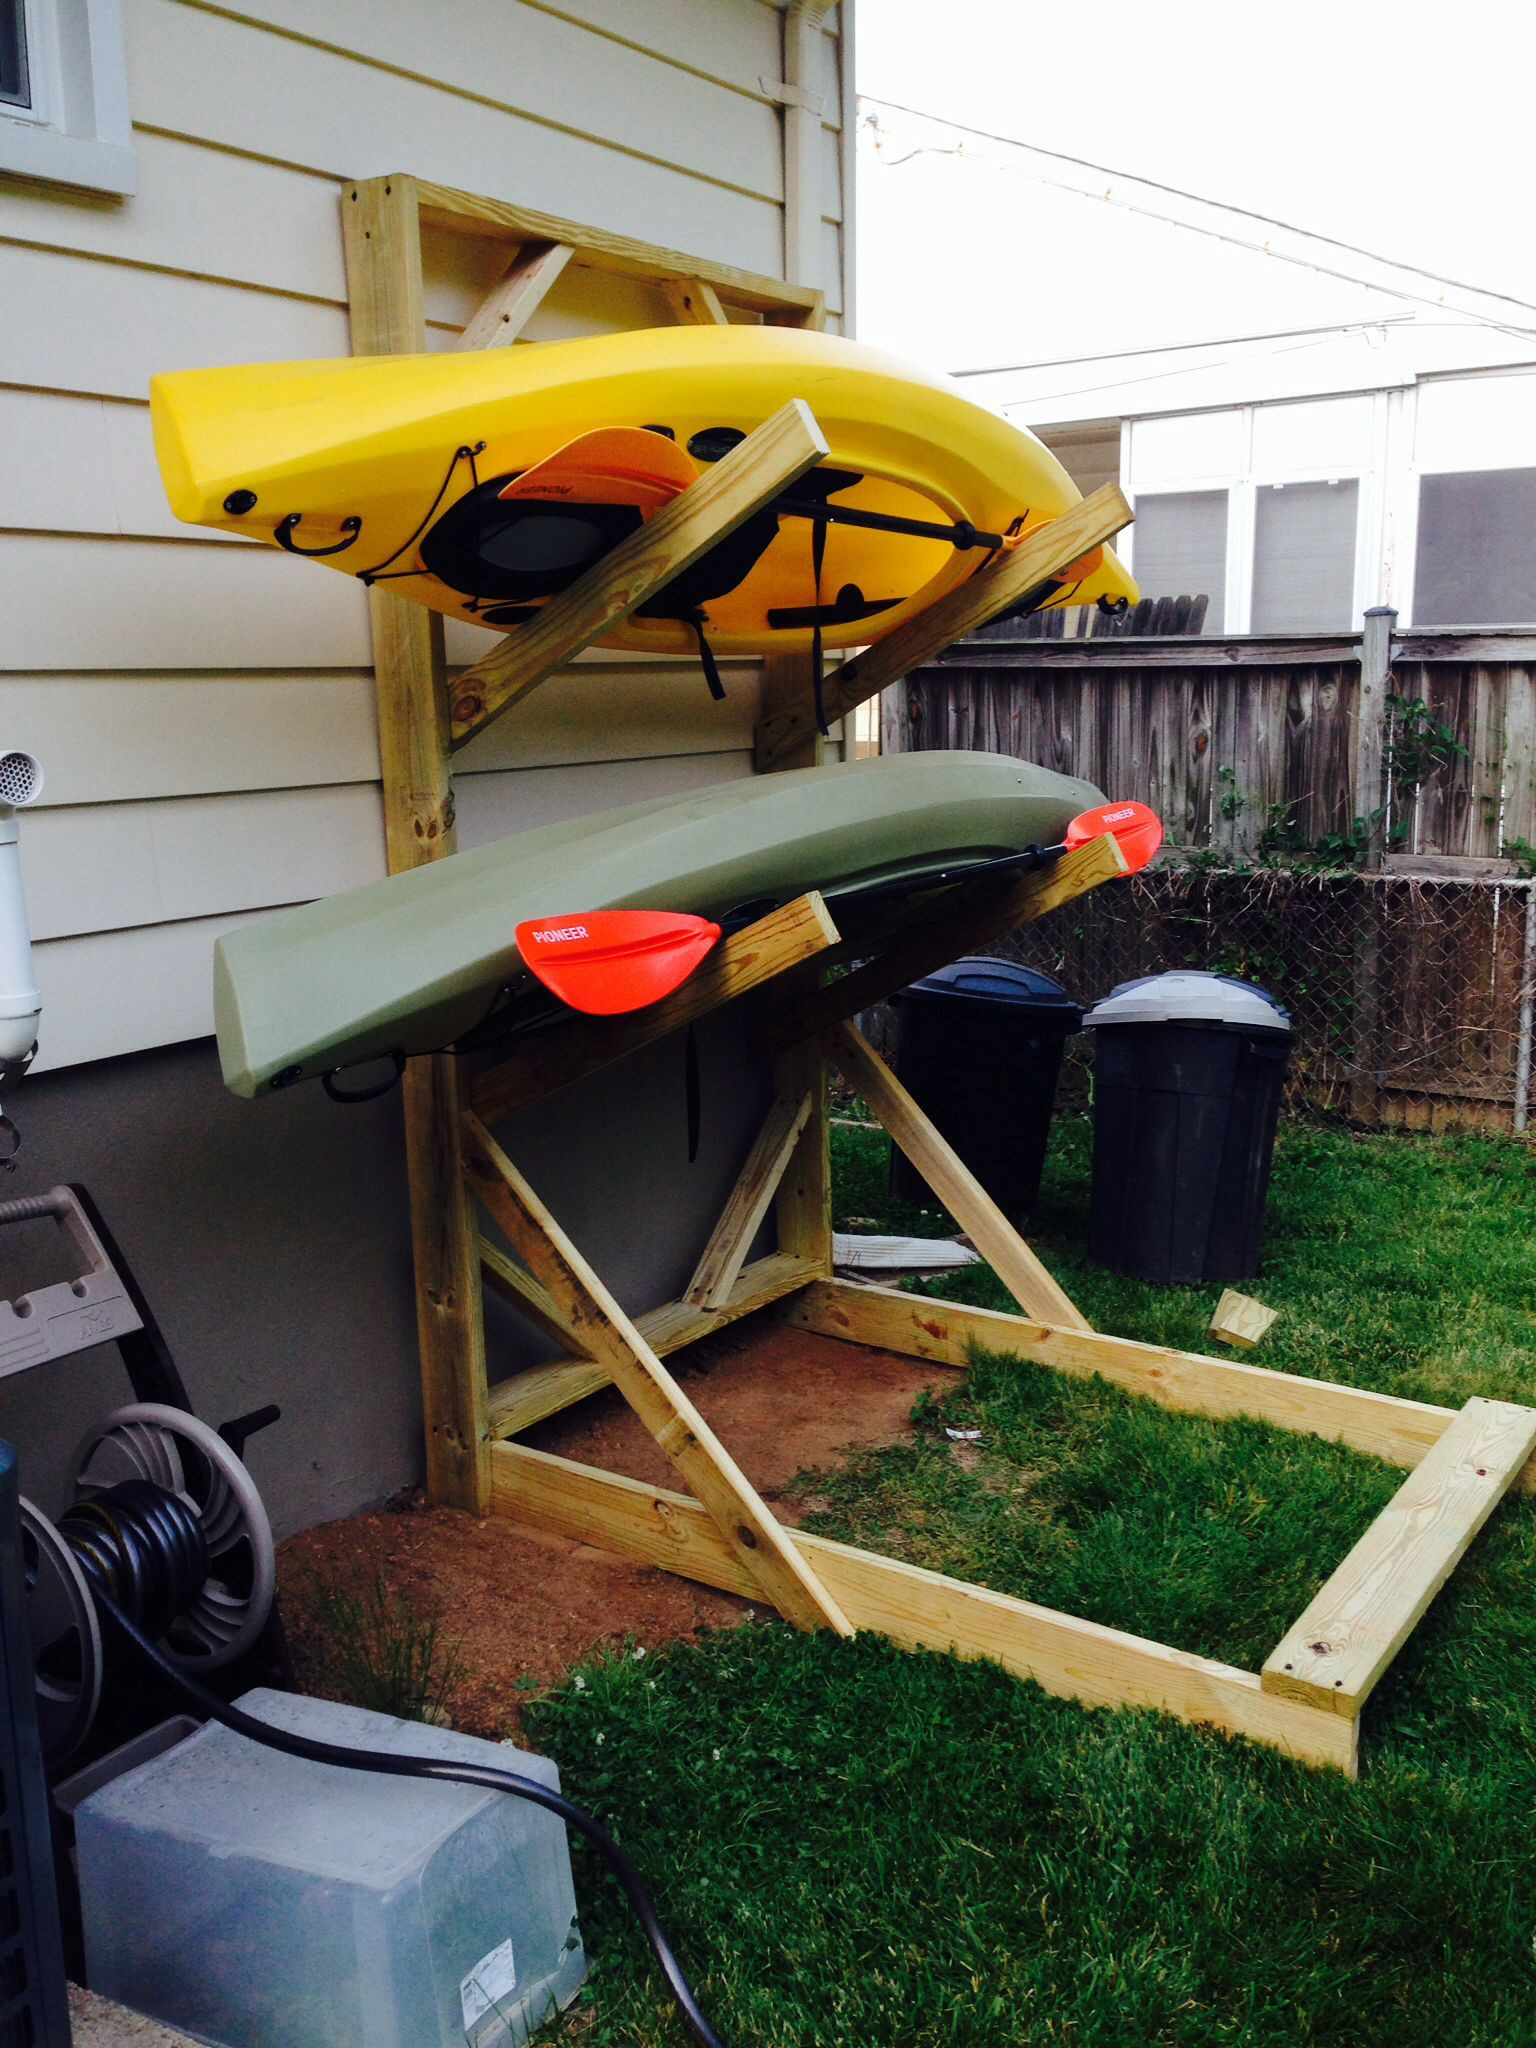 DIY Kayak Storage Rack Plans
 plete Diy outdoor canoe storage rack J Bome